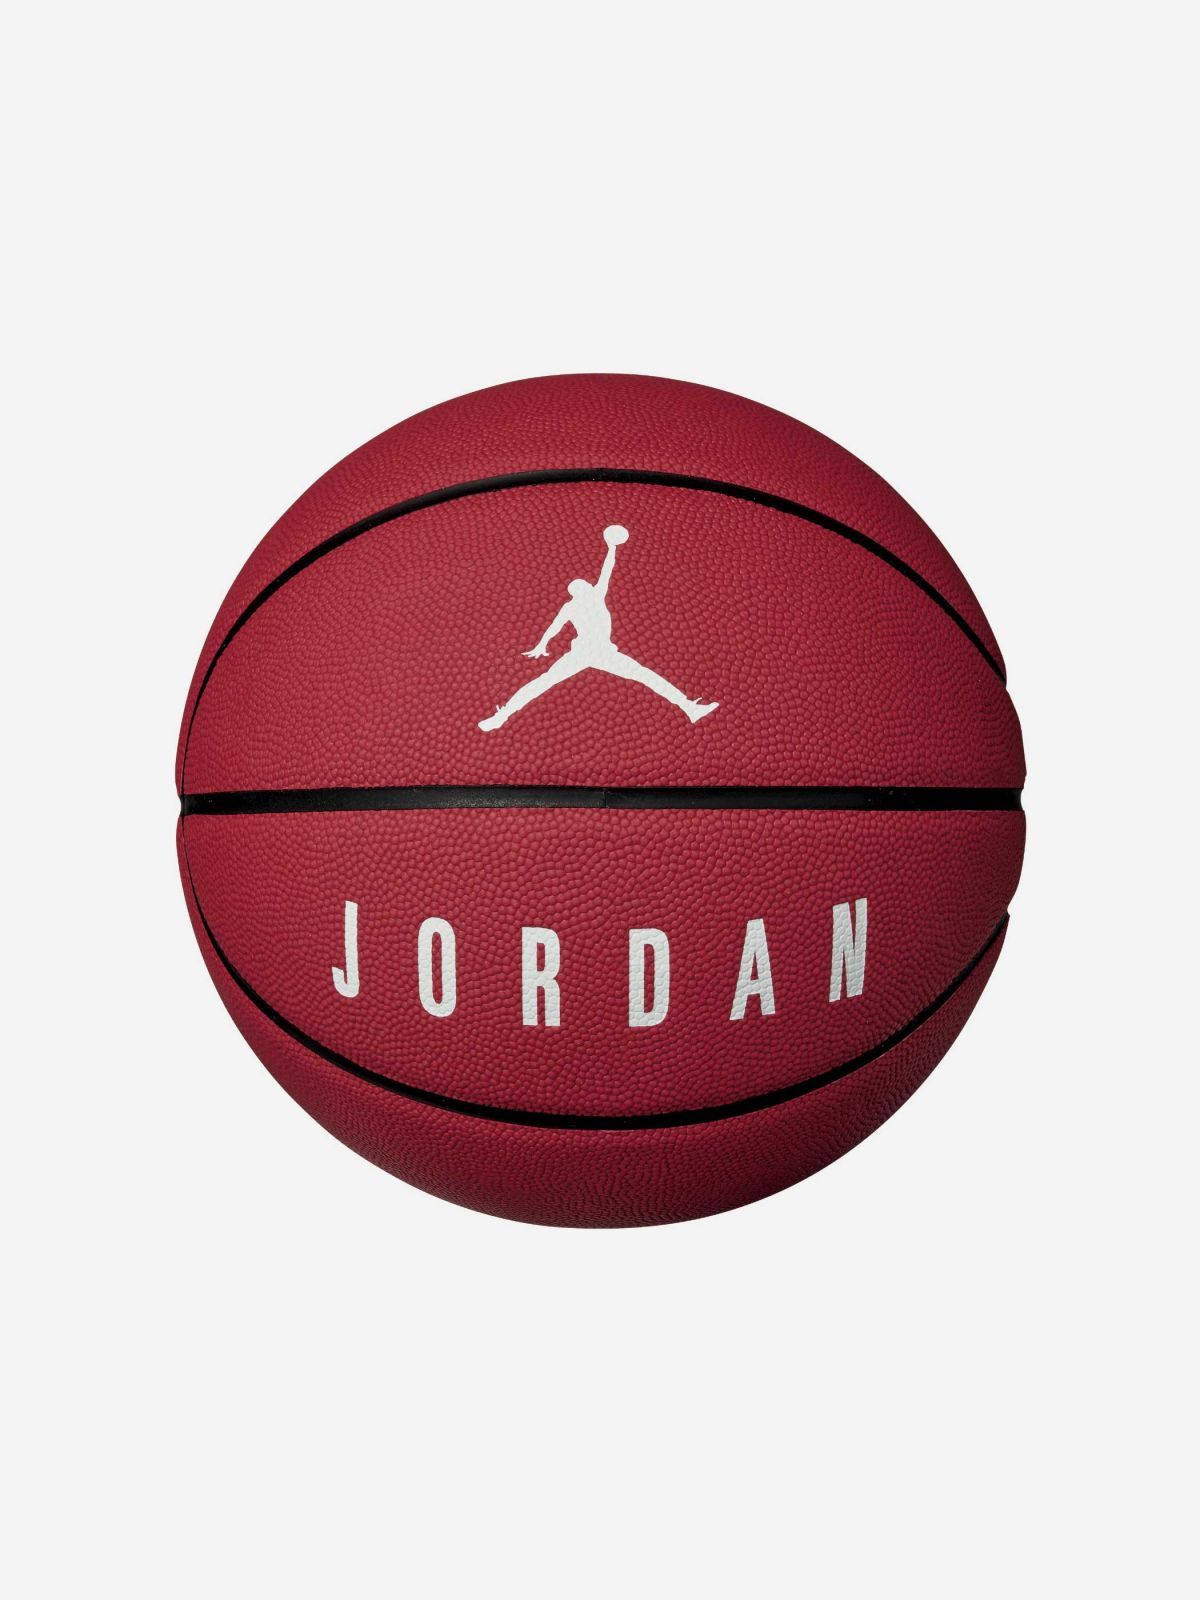  כדור כדורסל Jordan 8 של NIKE